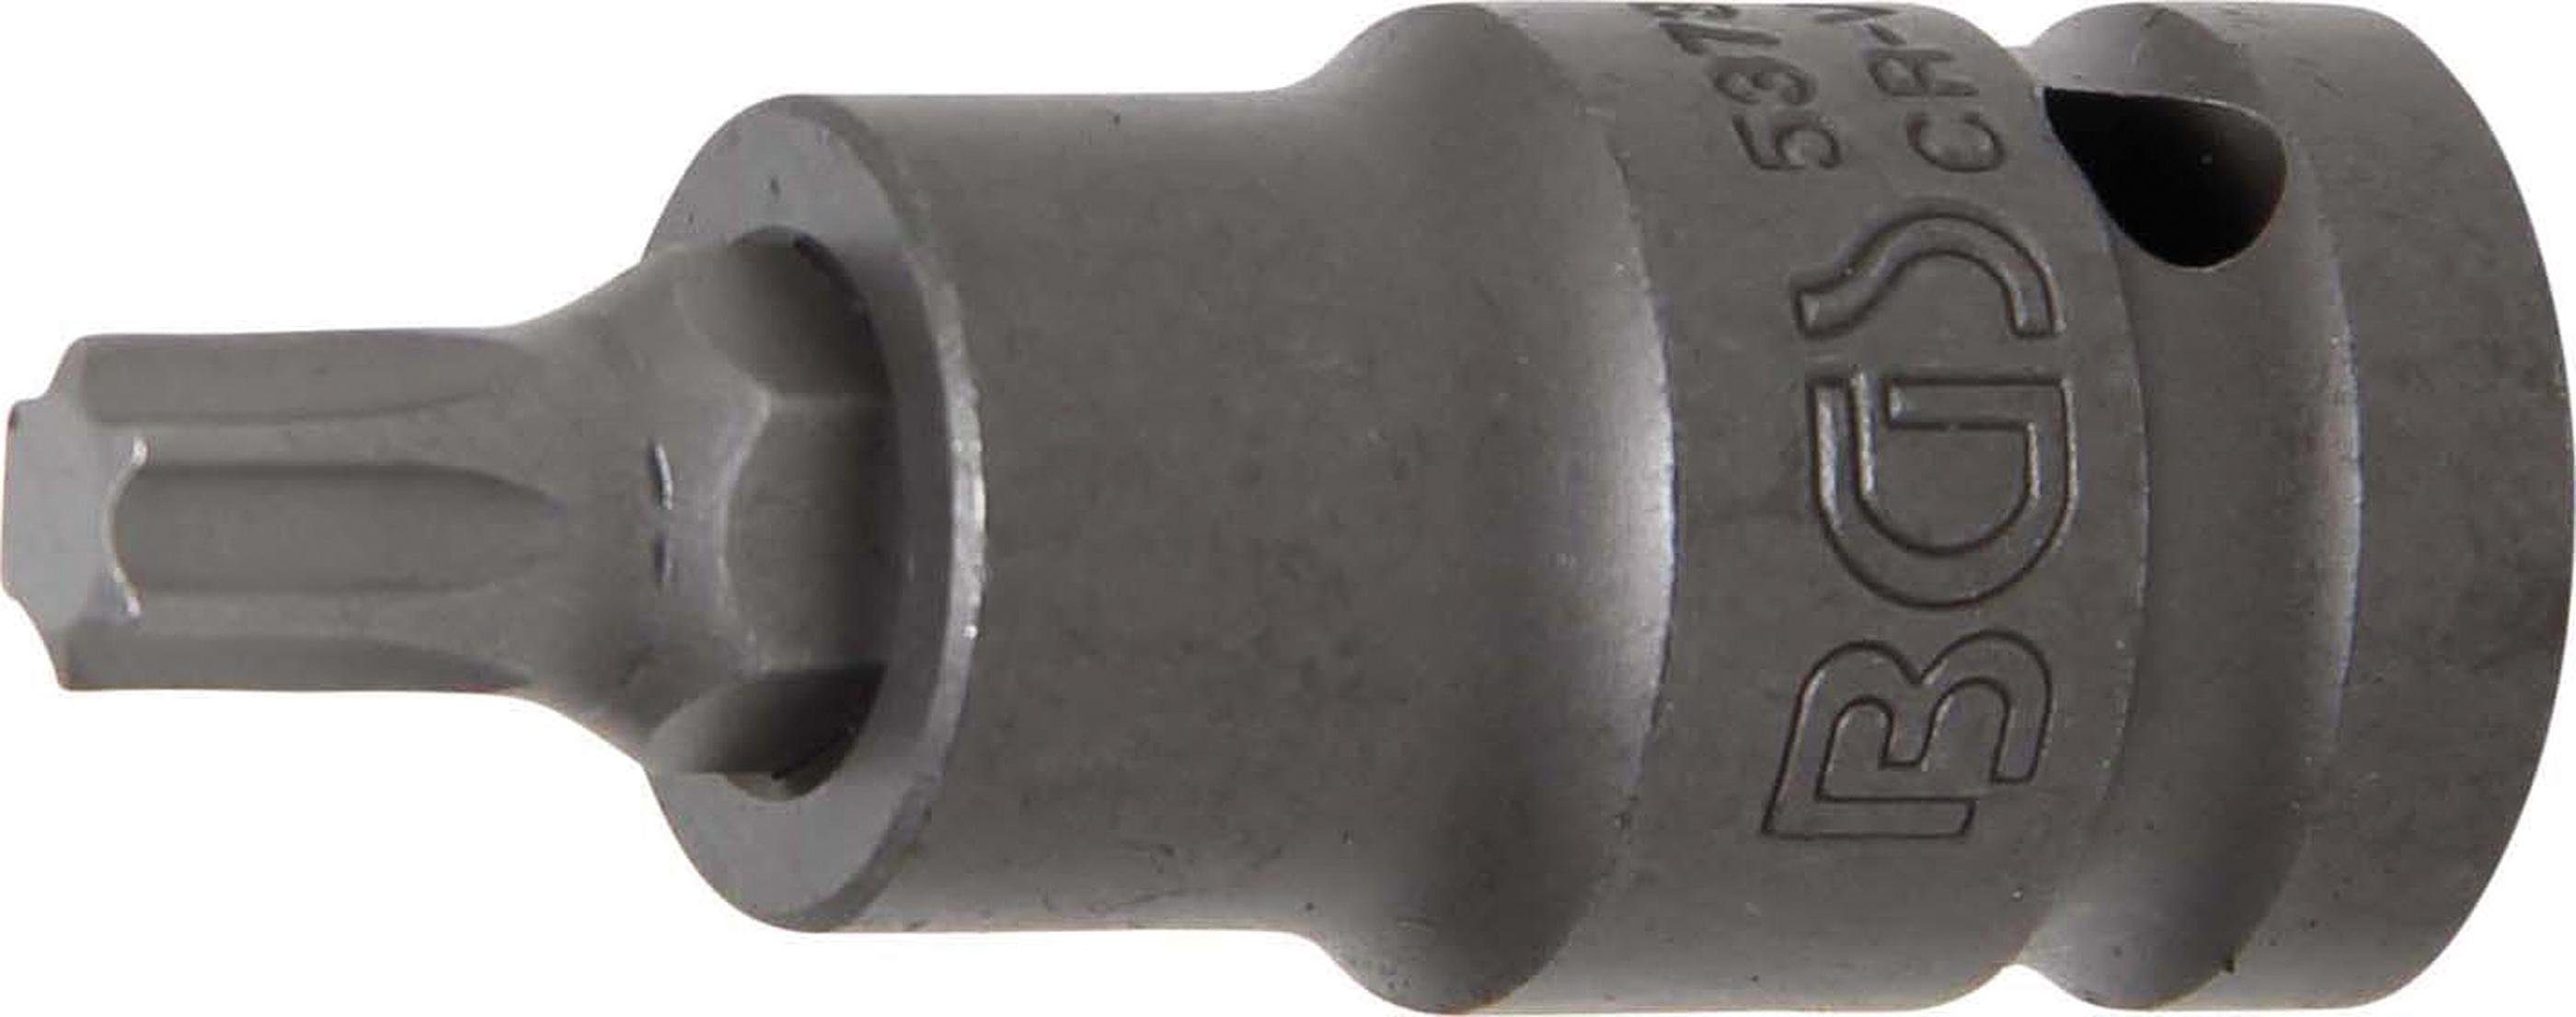 BGS technic Bit-Schraubendreher Kraft-Bit-Einsatz, Antrieb Innenvierkant 12,5 mm (1/2), T-Profil (für Torx) T45